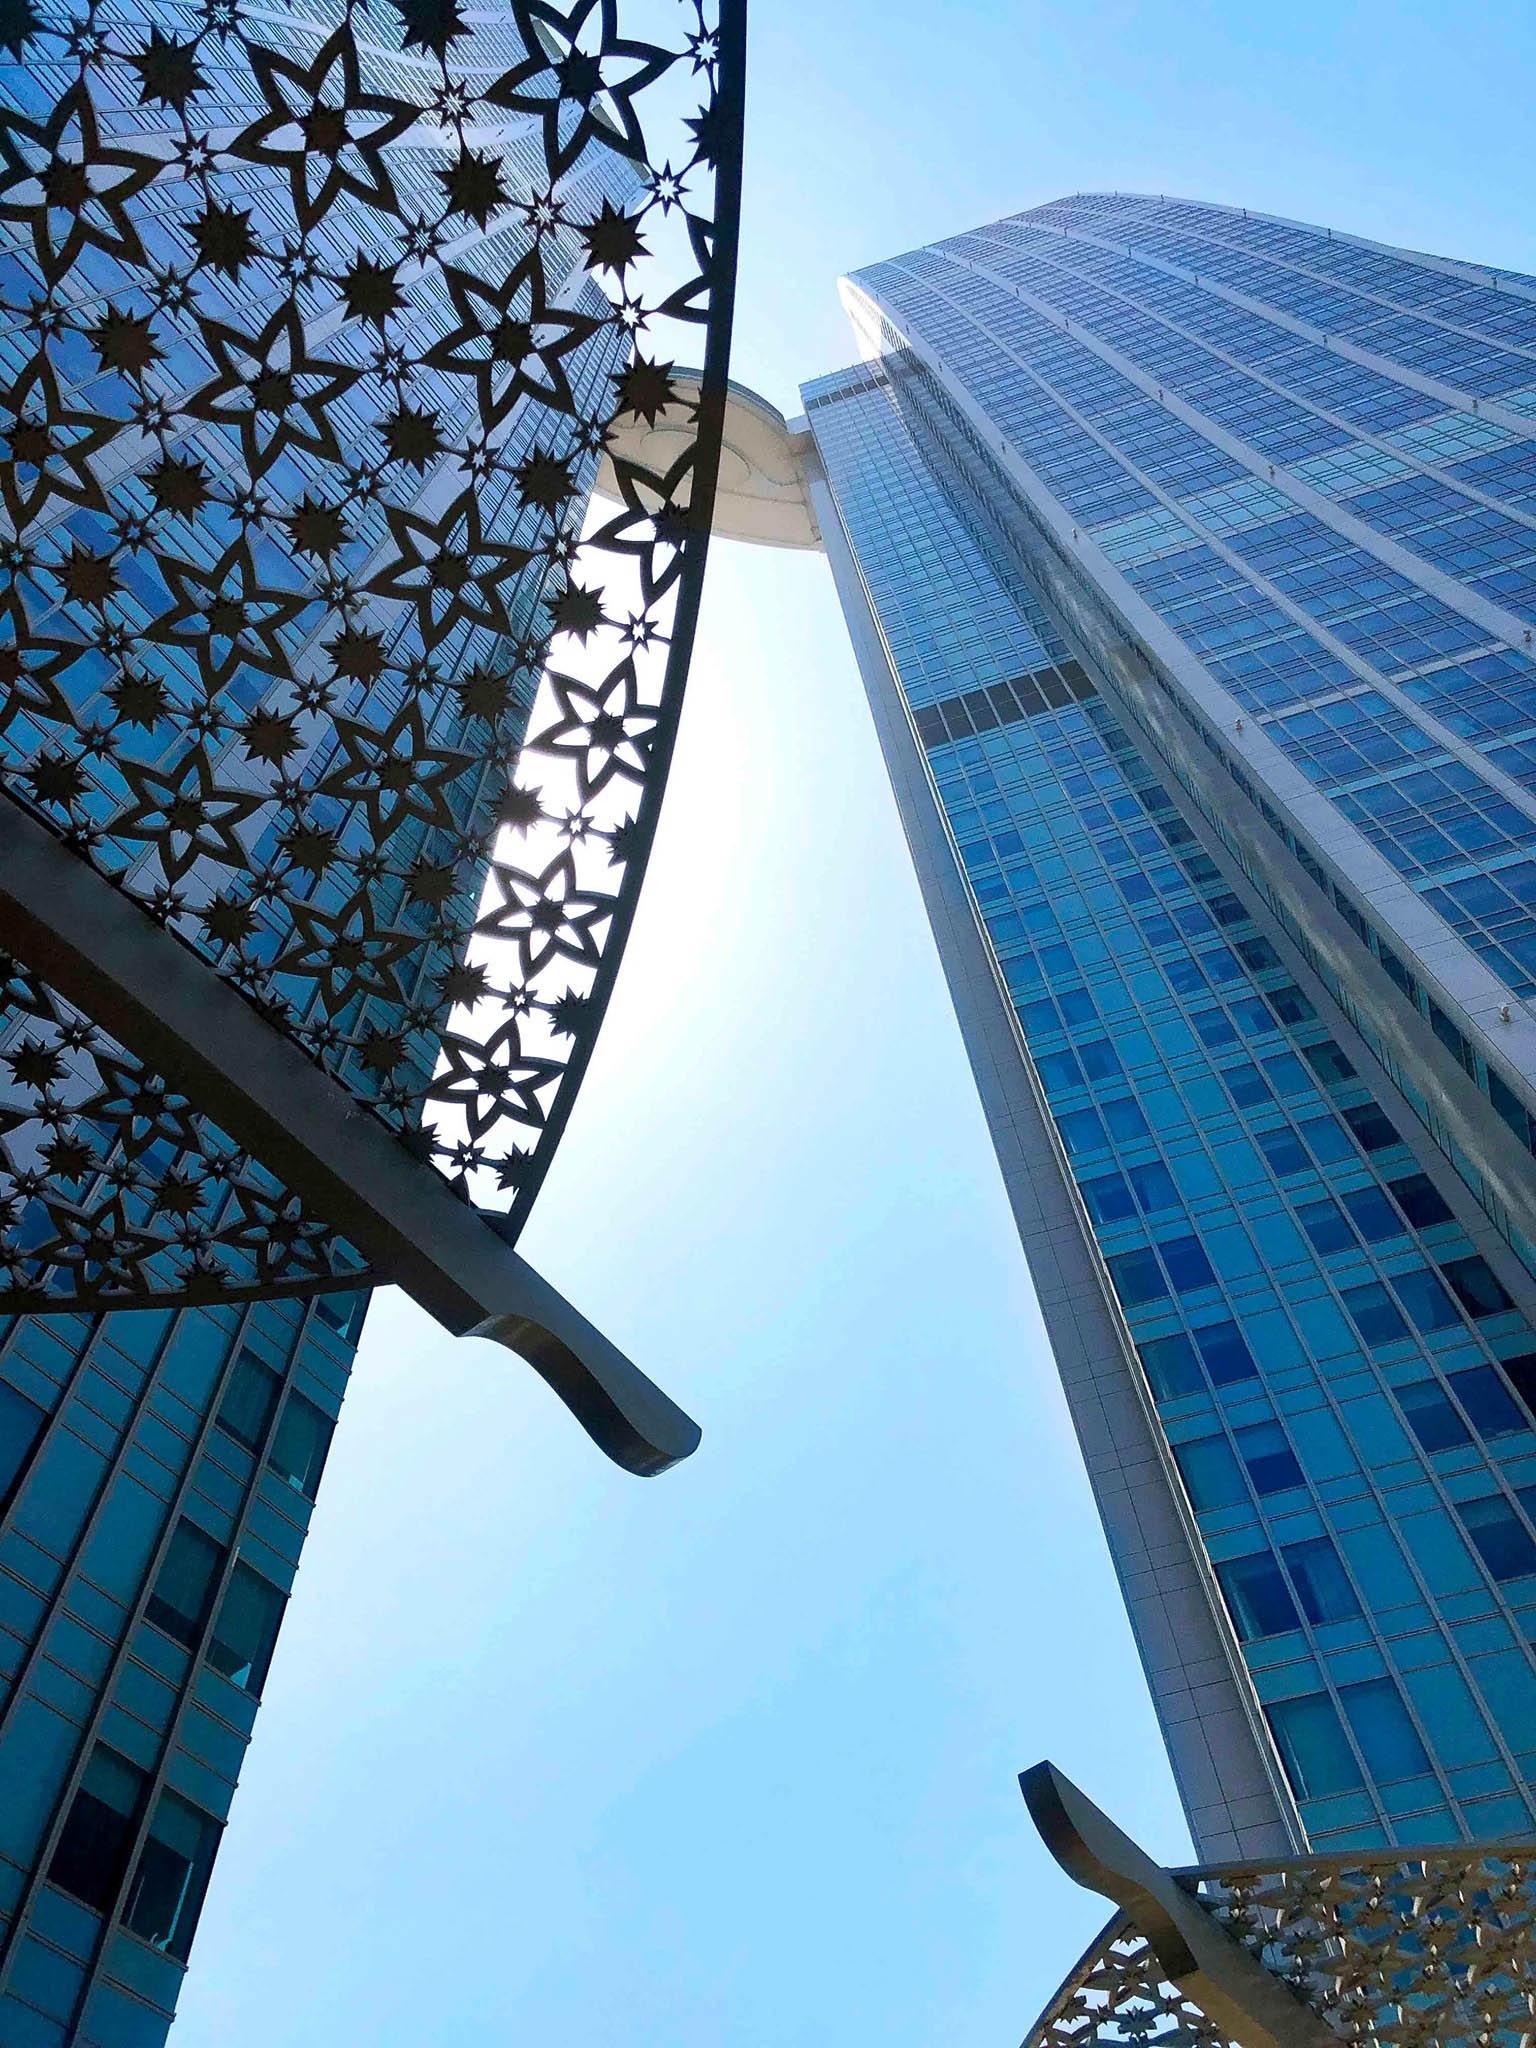 The St. Regis Abu Dhabi Hotel – Abu Dhabi, United Arab Emirates – Twin Tower View Looking Up